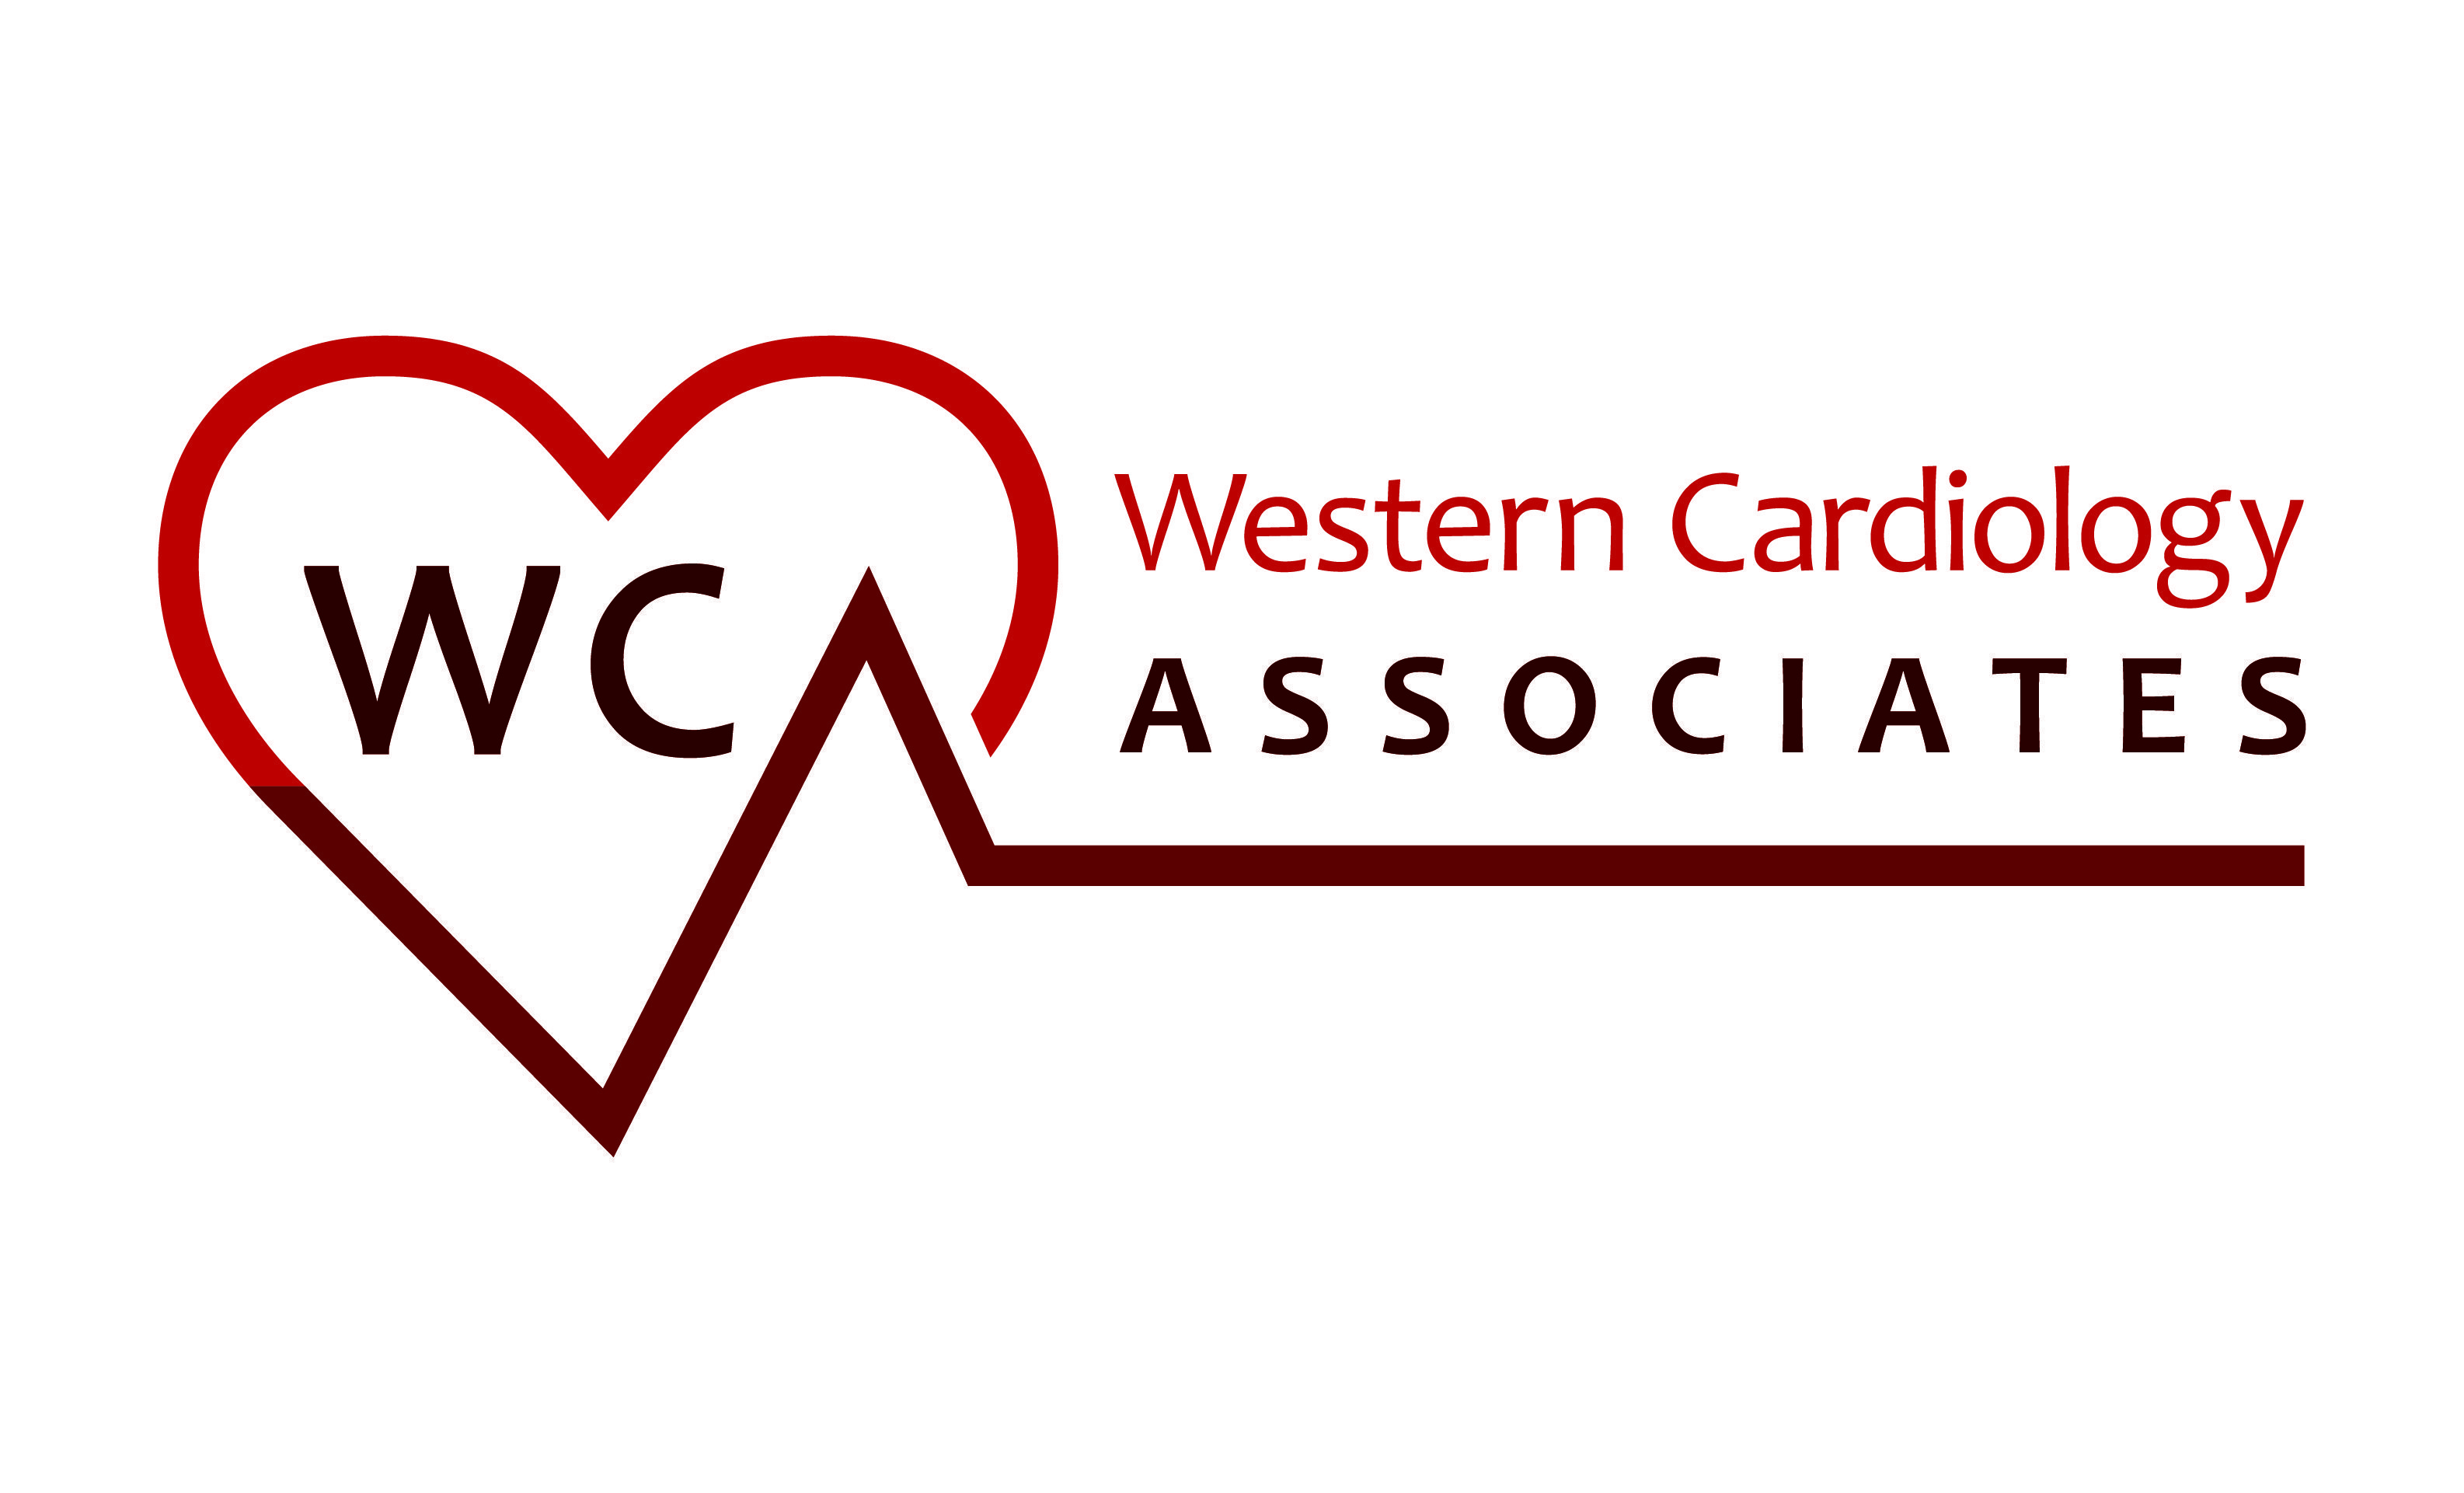 Western Cardiology Associates